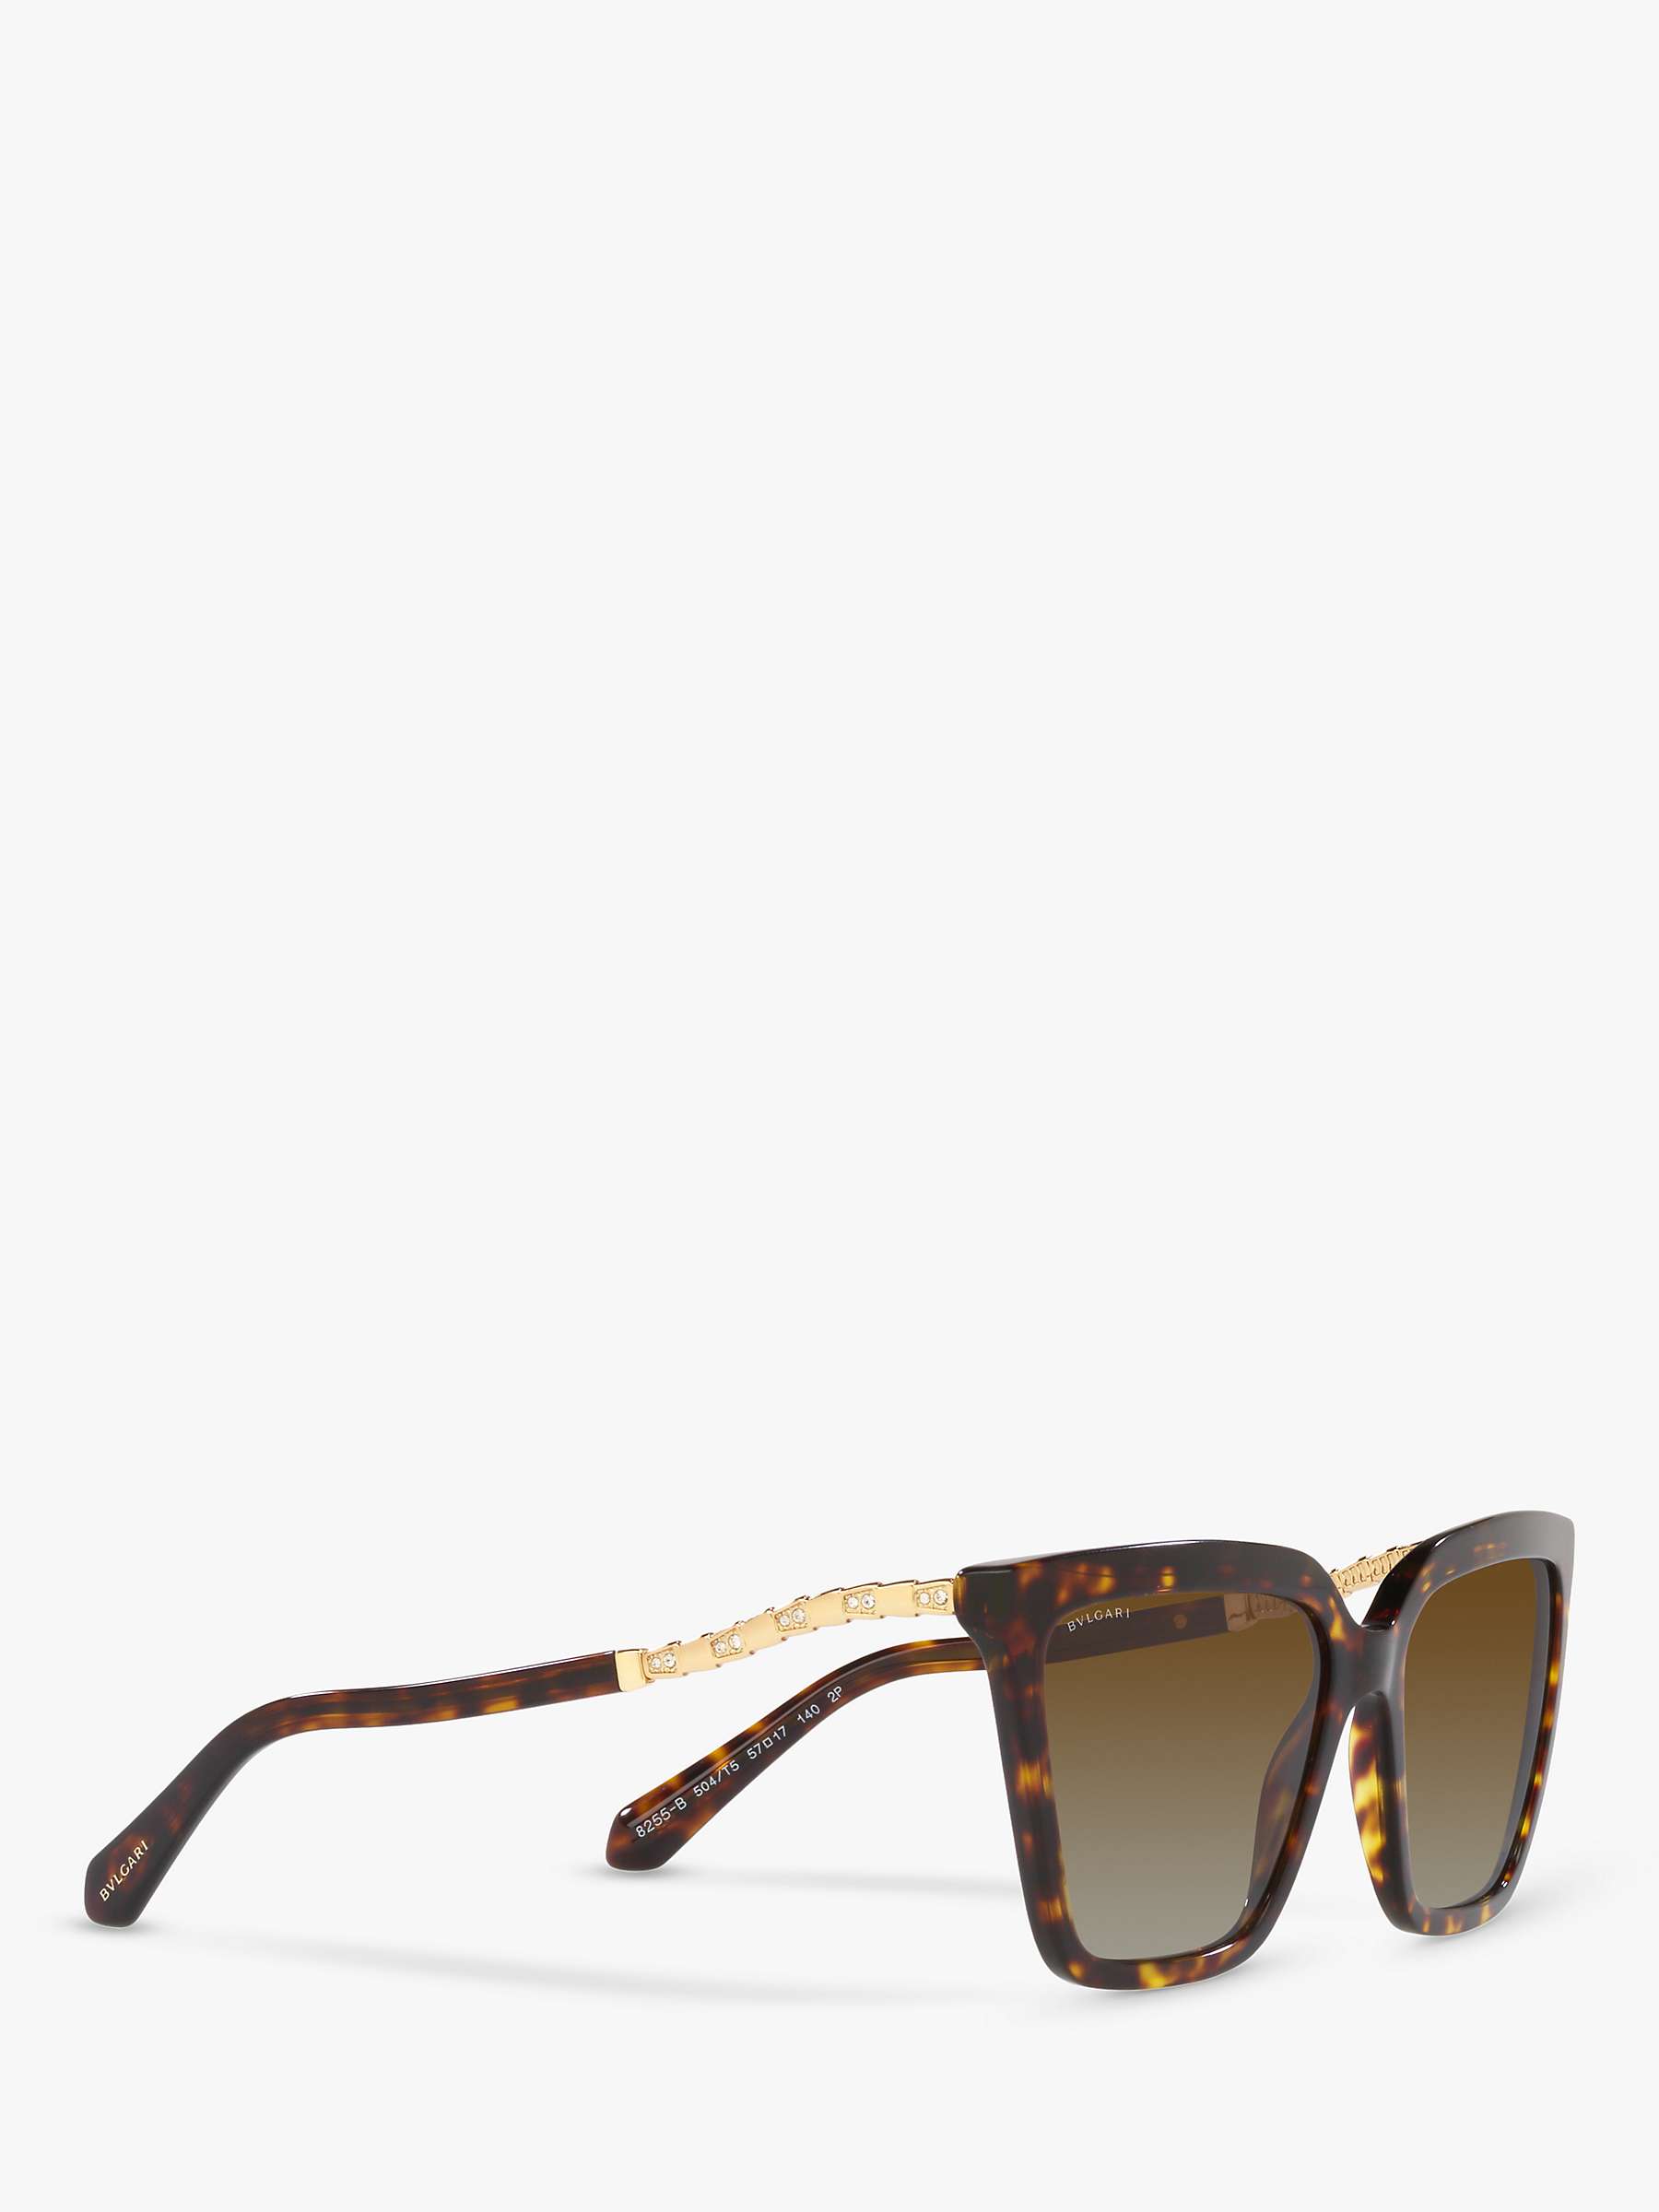 Buy BVLGARI BV8255B Women's Cat's Eye Sunglasses, Tortoise/Brown Gradient Online at johnlewis.com